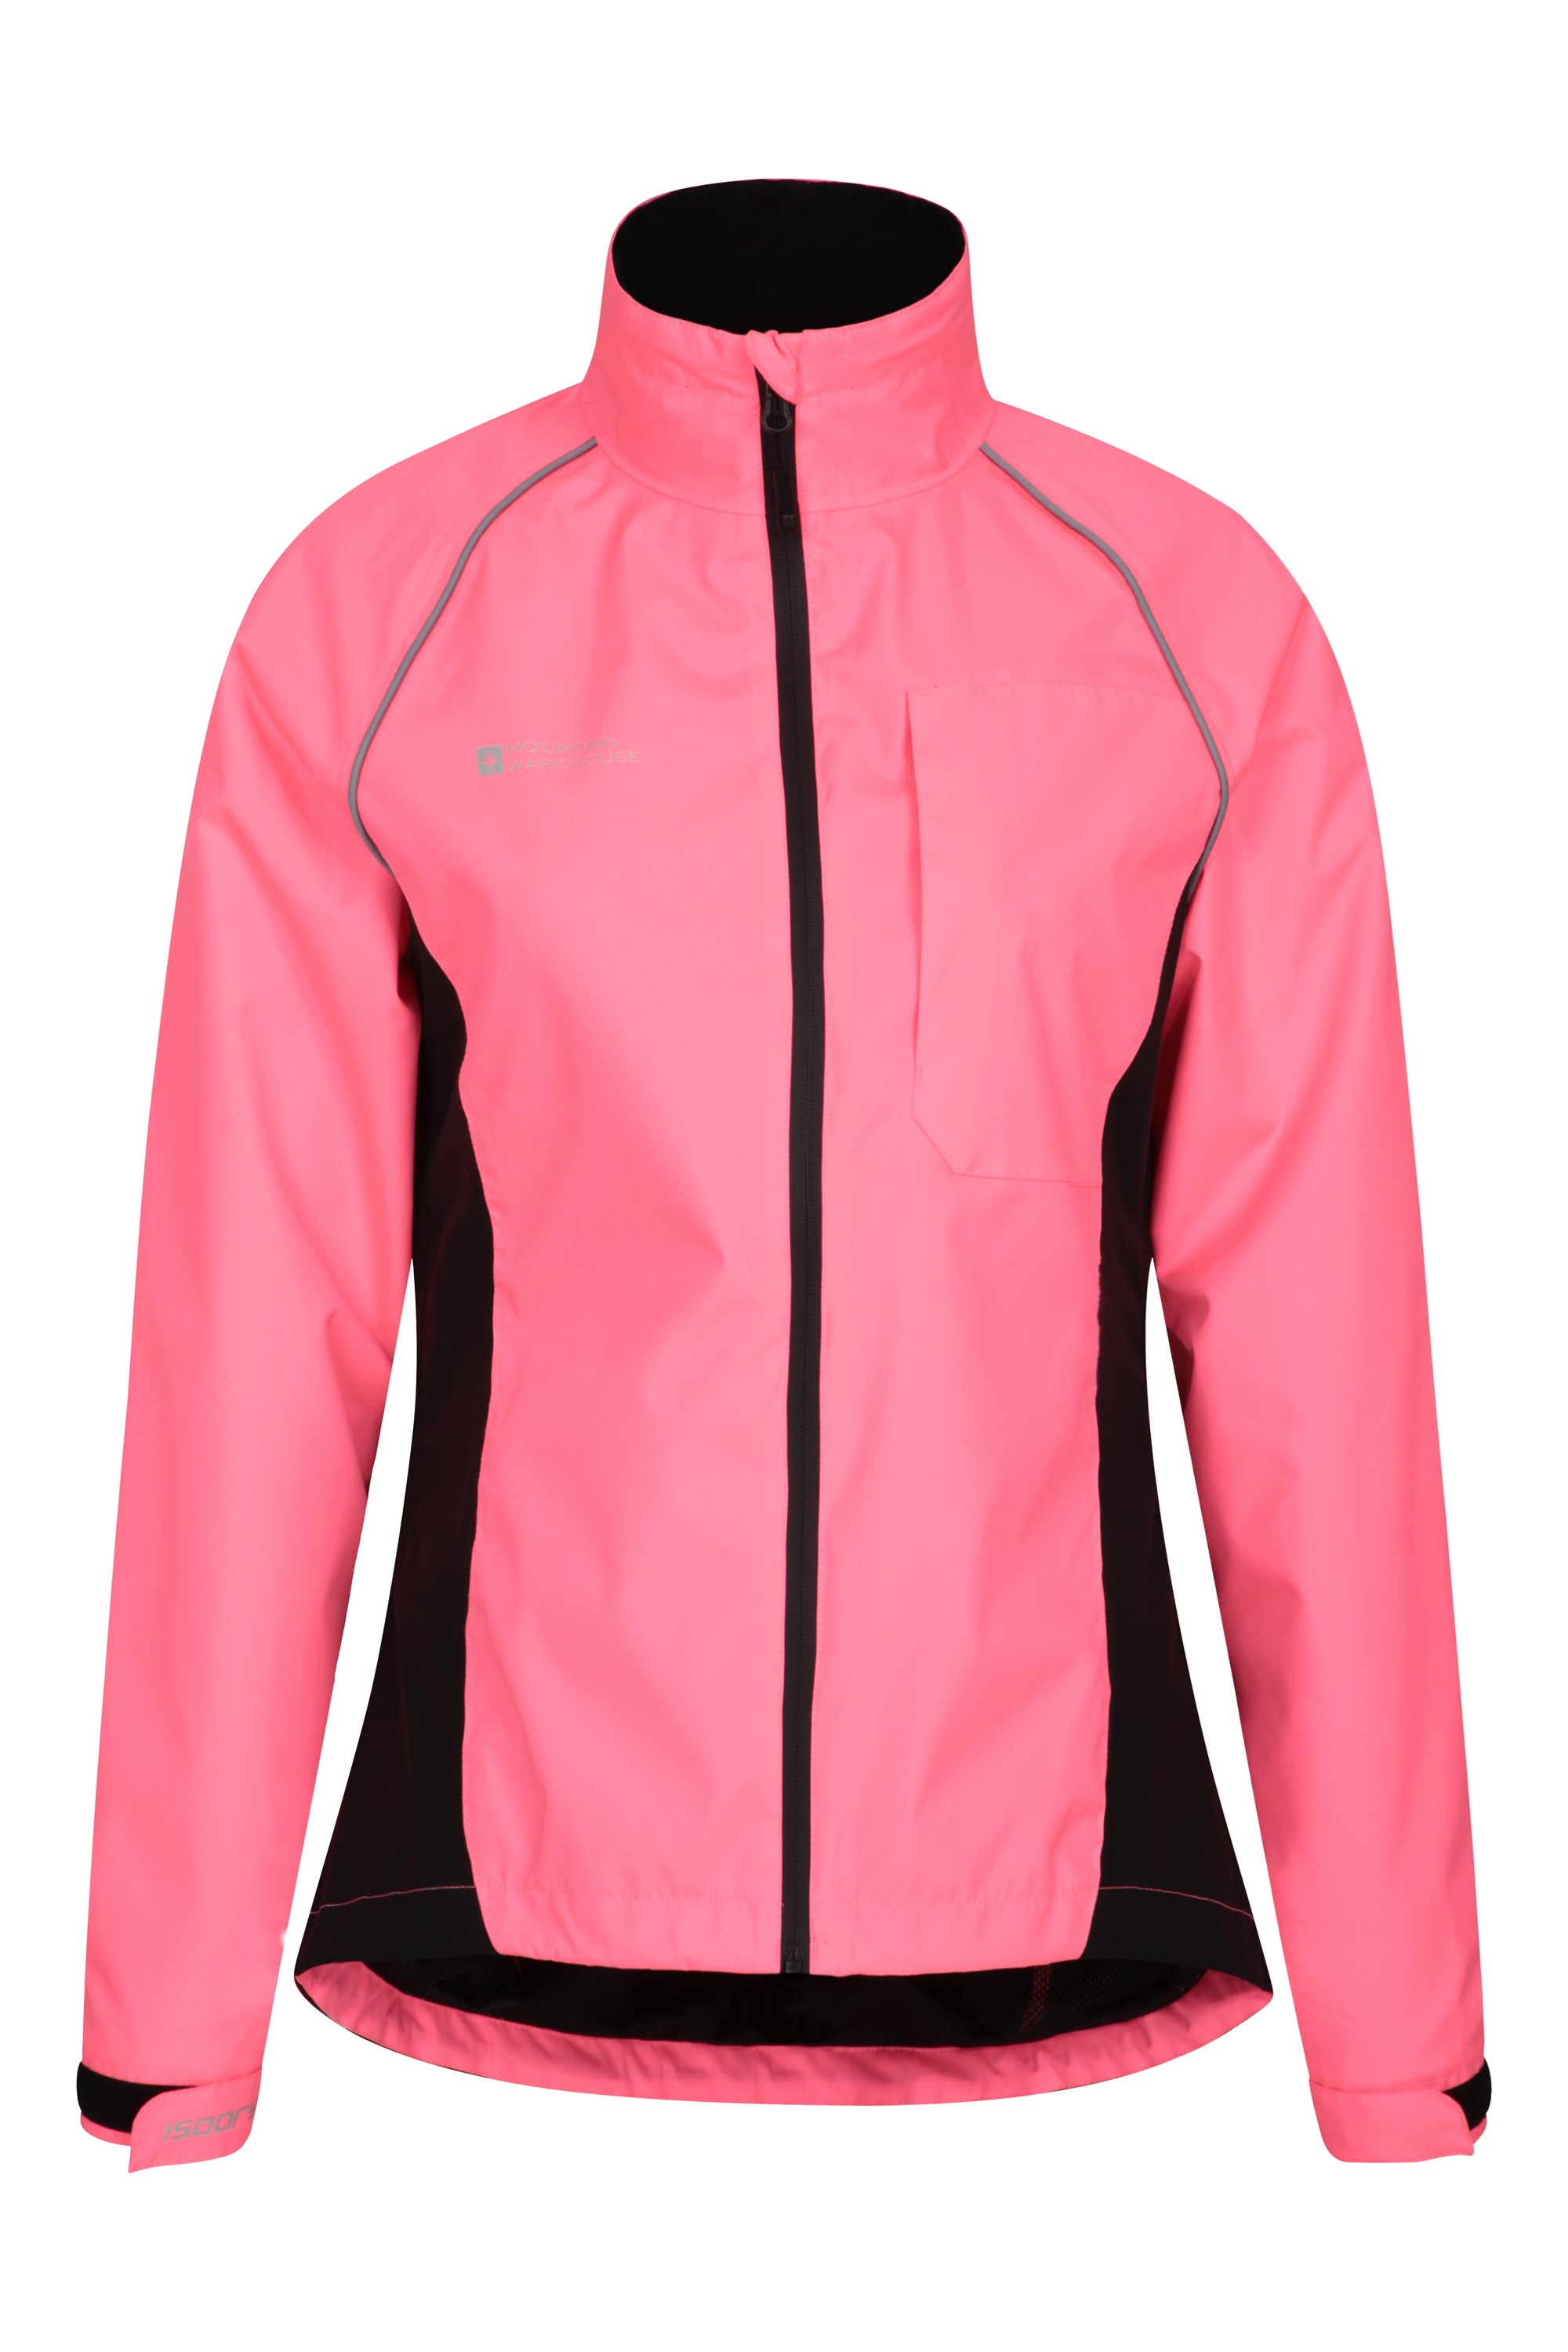 women's reflective waterproof running jacket